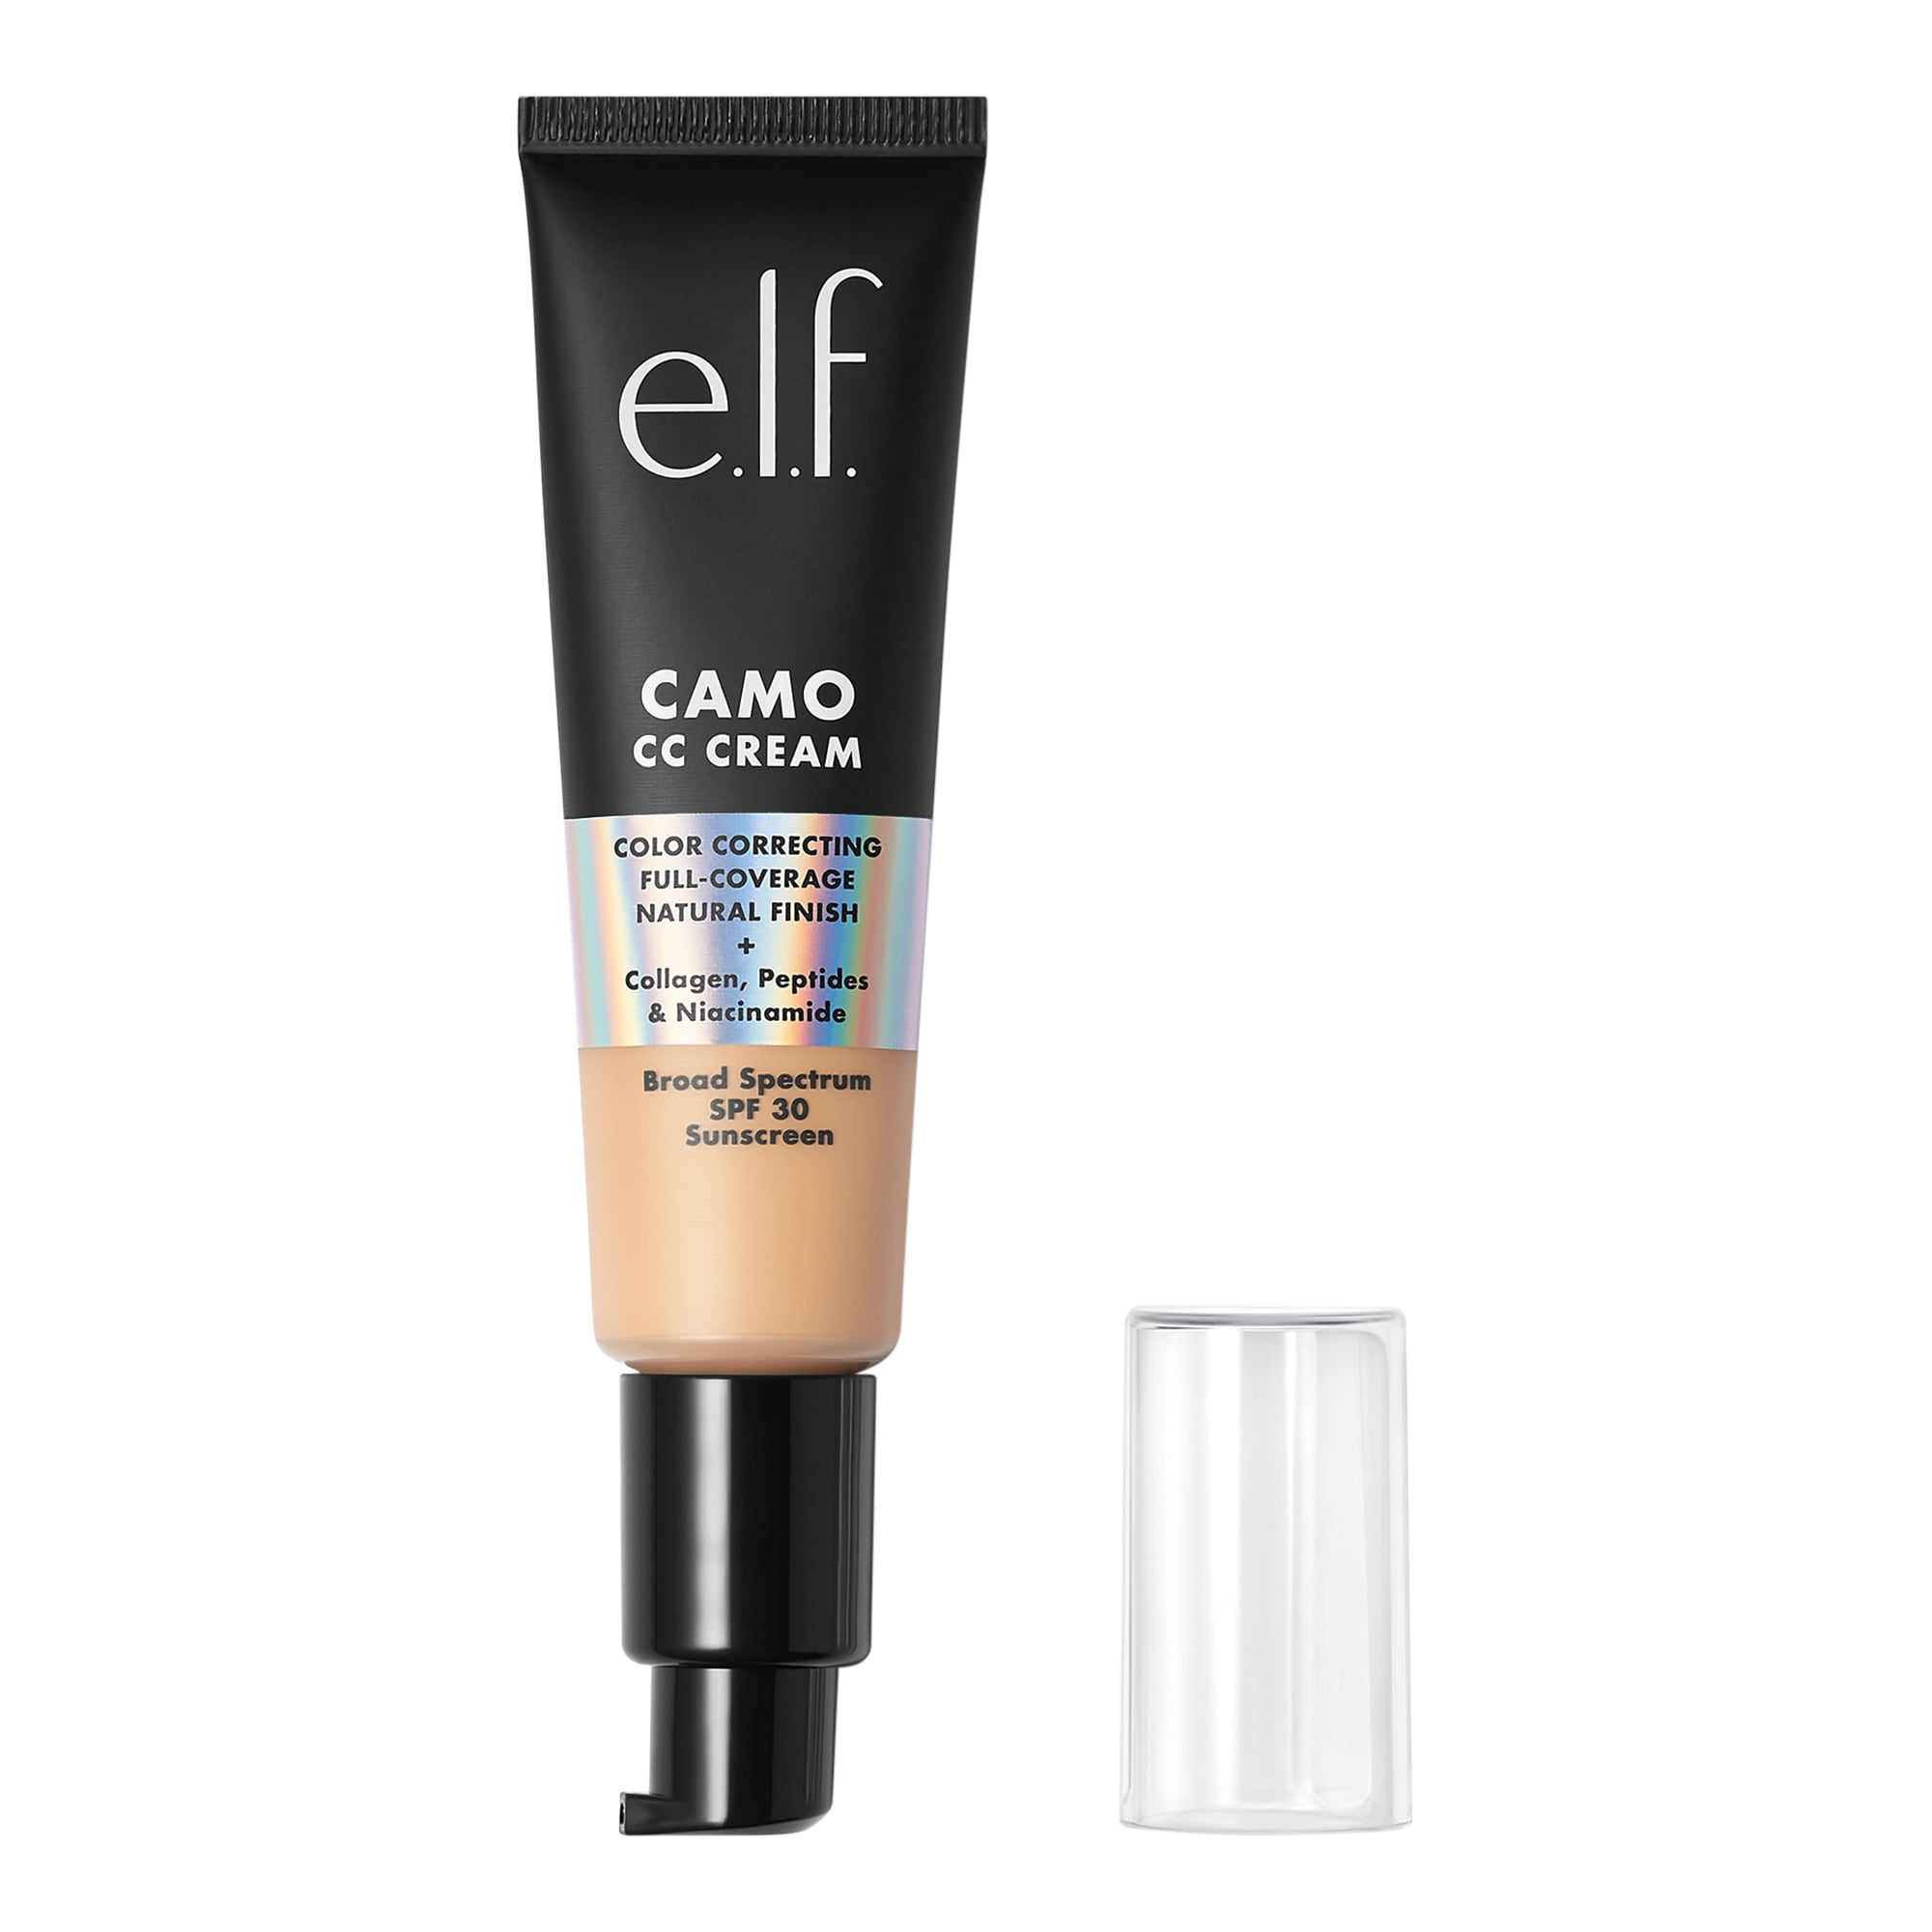 e.l.f. Camo CC Cream, Light 240 W, 1.05 oz